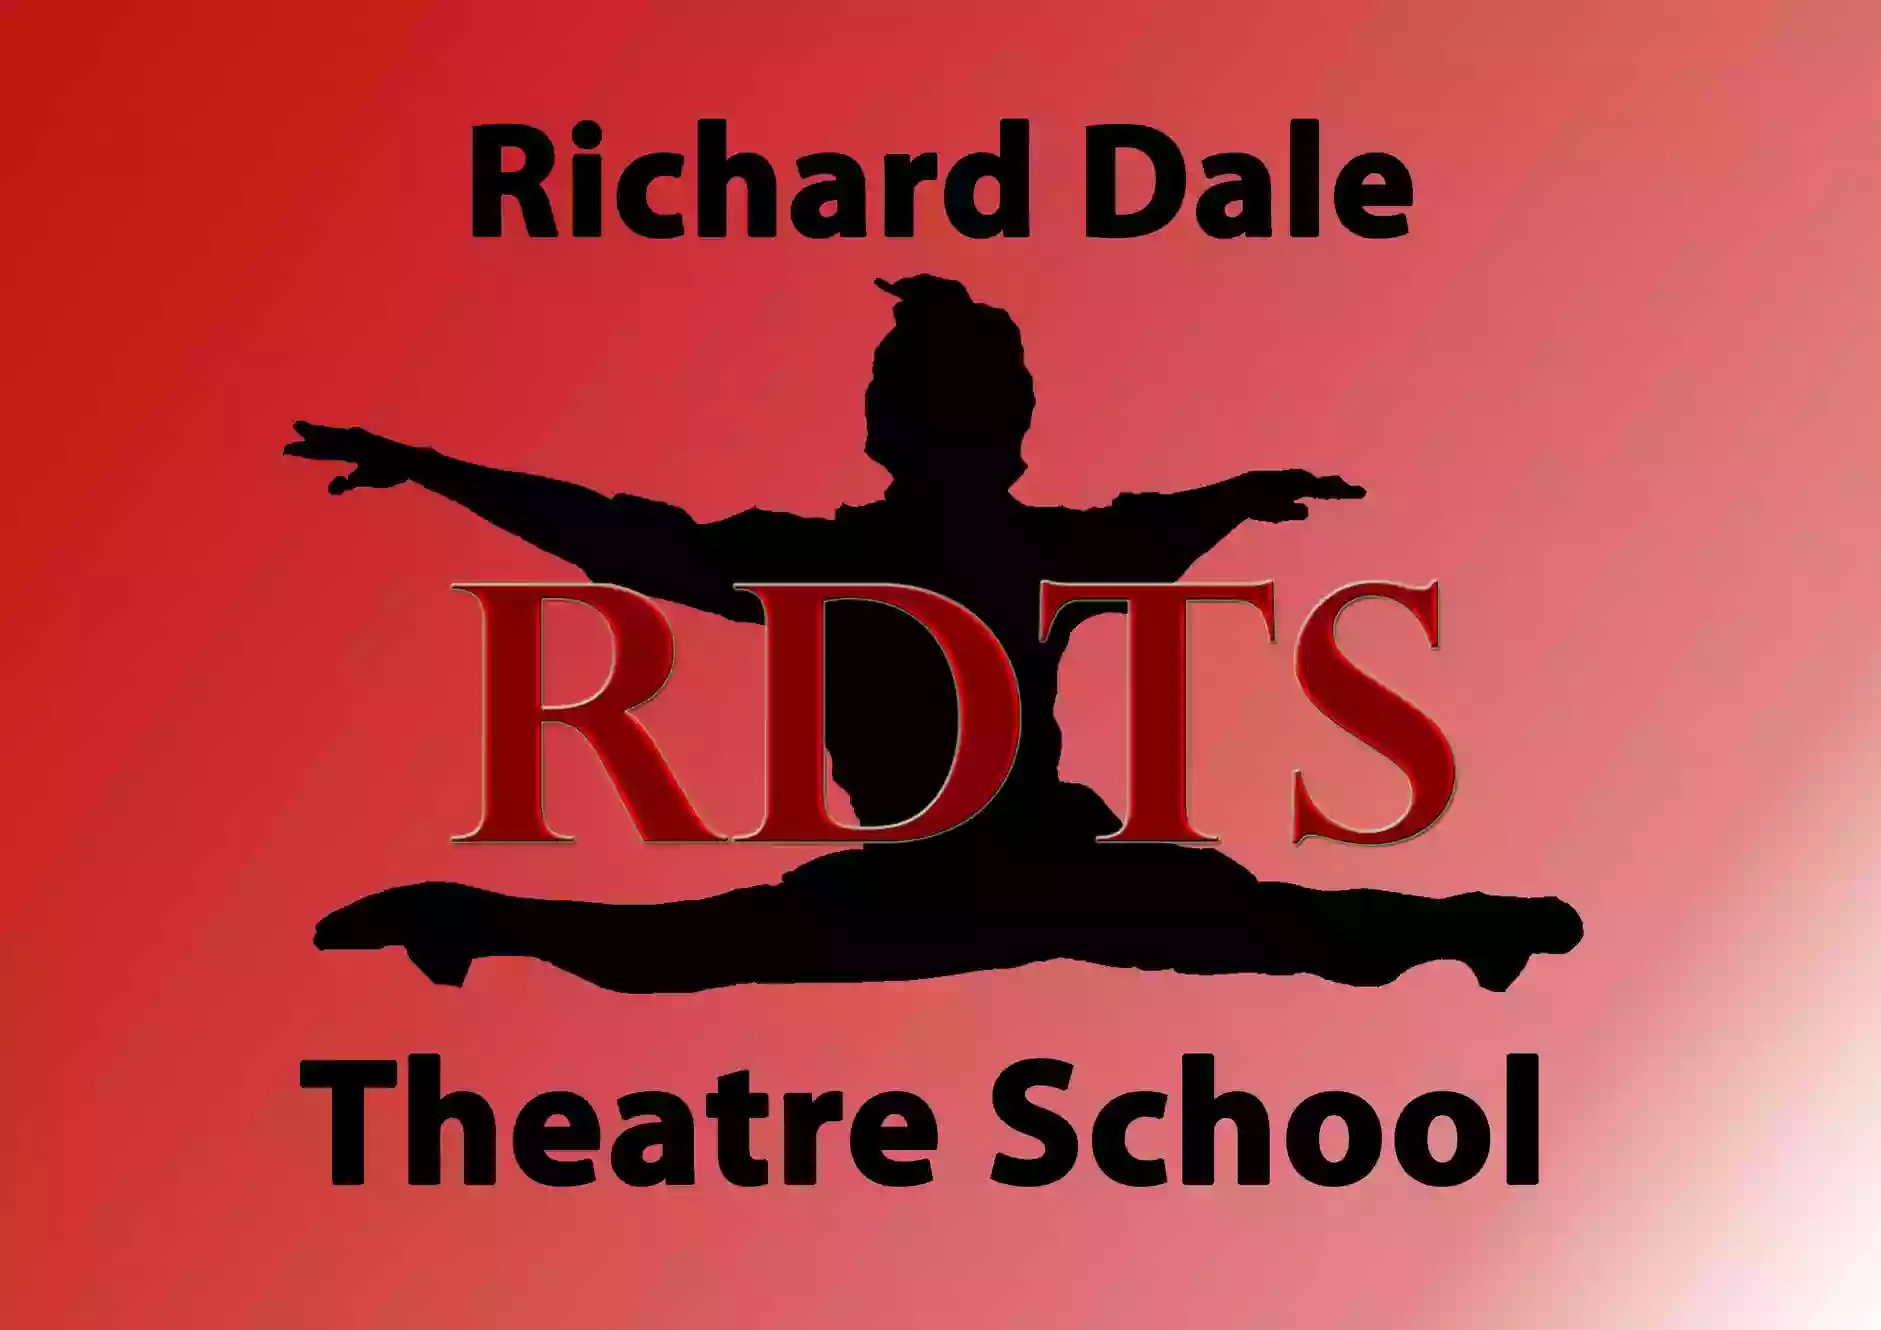 Richard Dale Theatre School